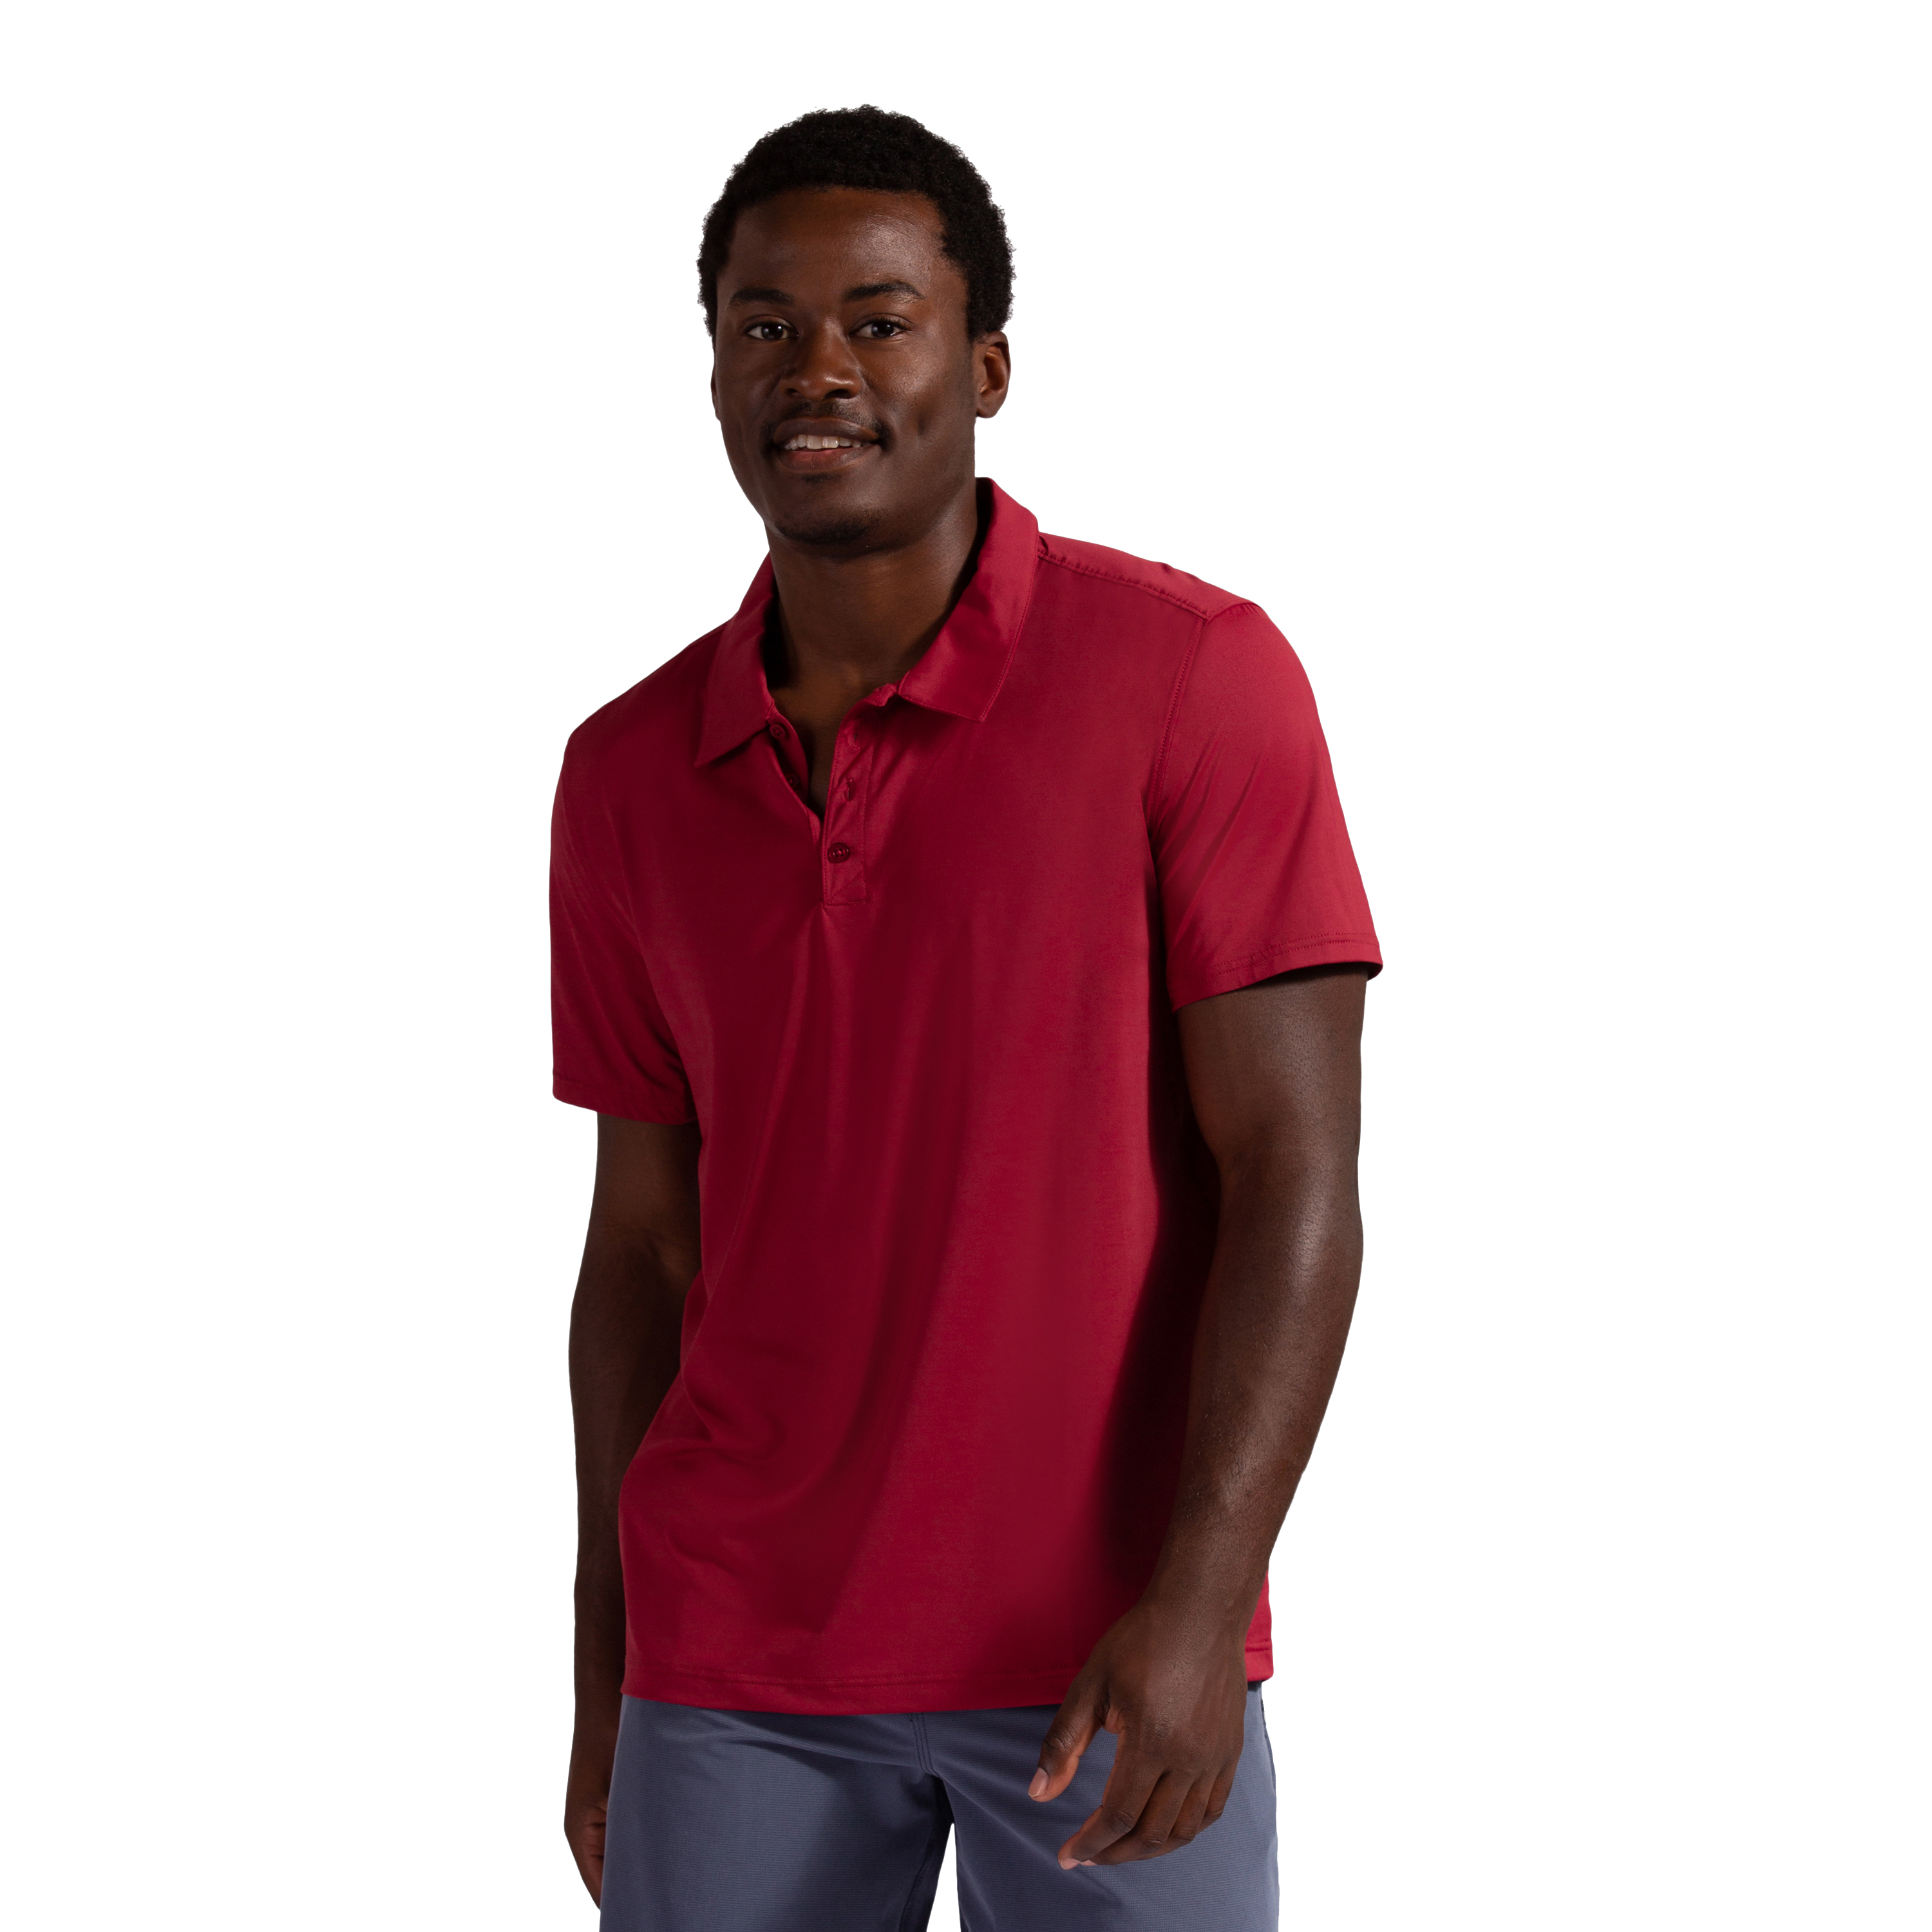 BloqUV Men's UPF 50+ Sun Protection Short Sleeve Polo Shirt (Red Wine)